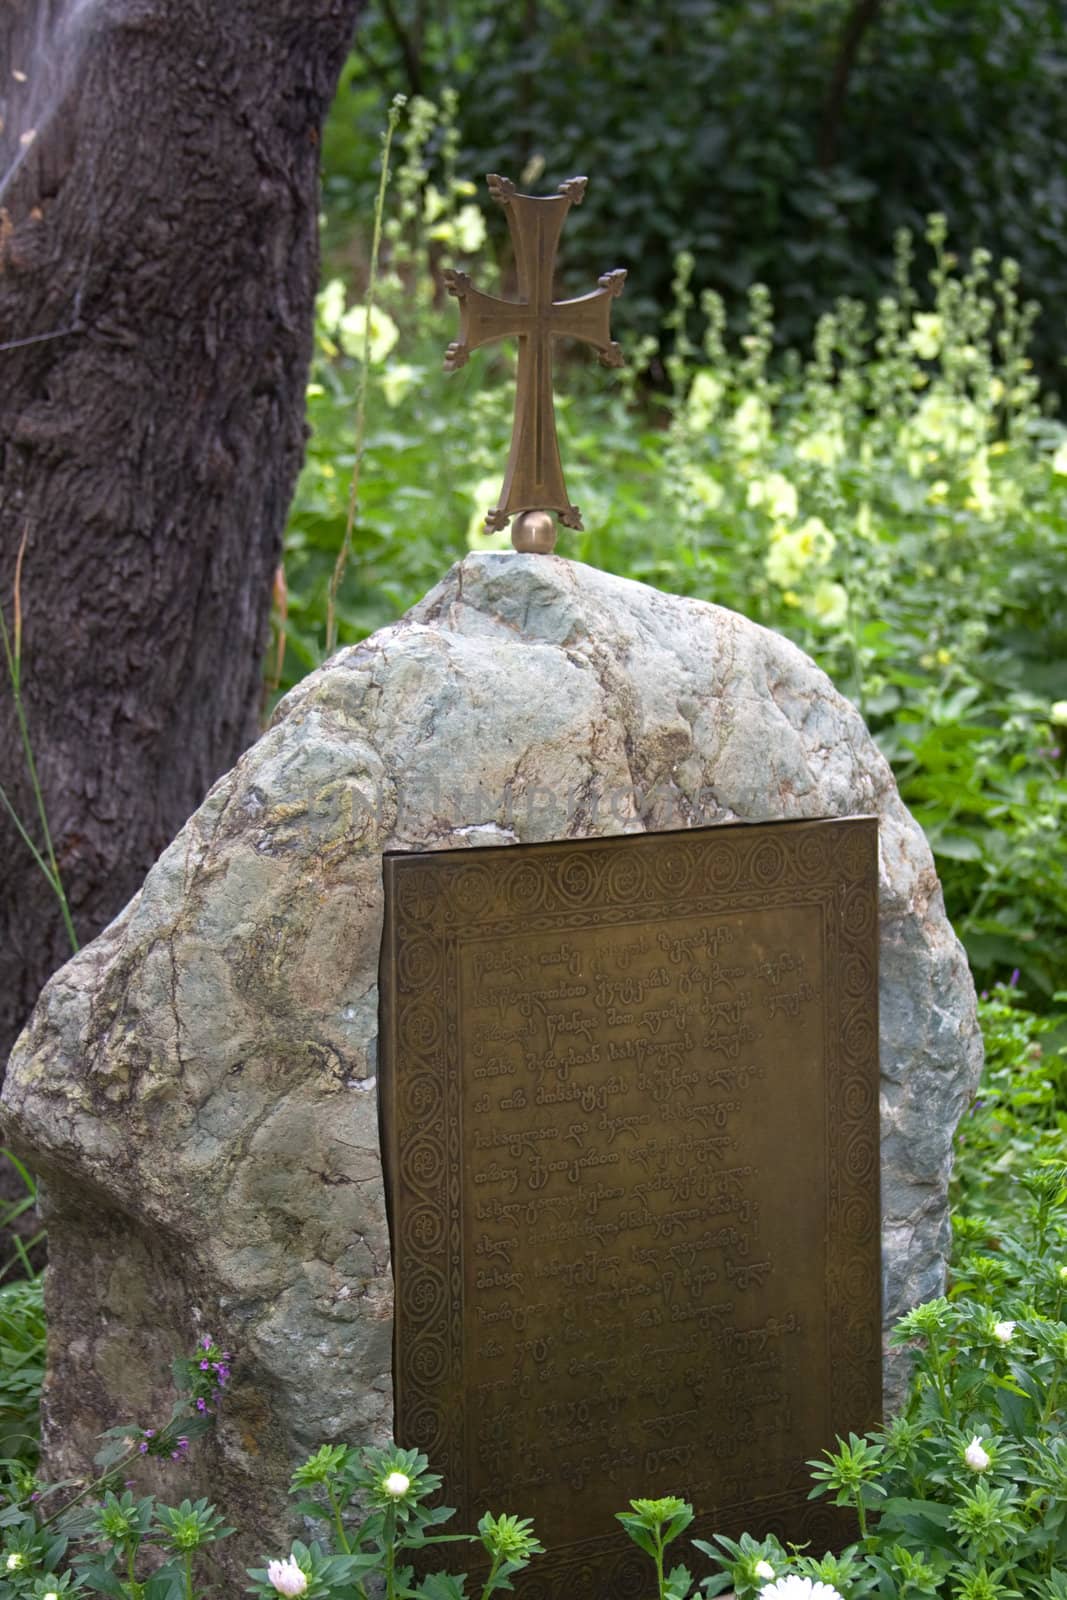 Georgian sign on the old gravestone near the tree